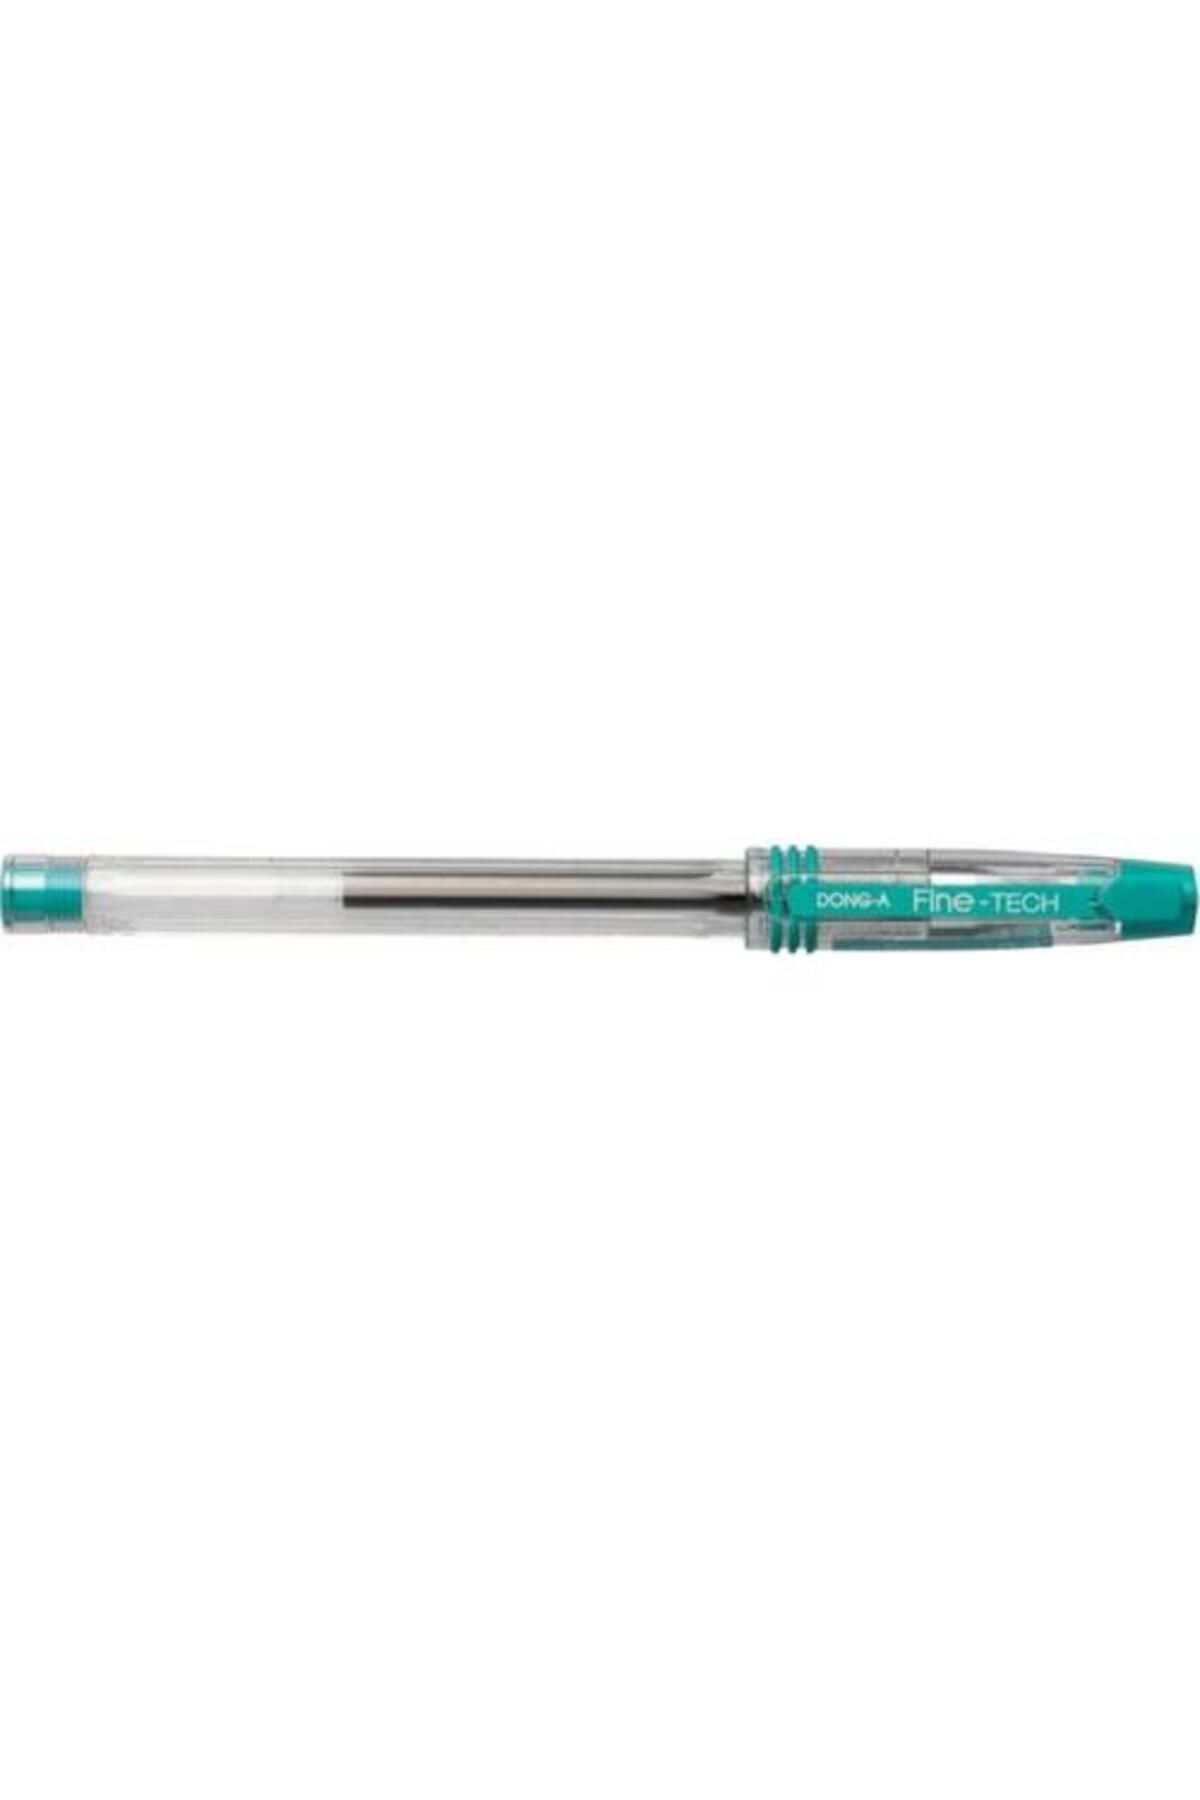 Dong A Çizgi Kalemi - Yeşil - Iğne Uçlu Su Bazlı 0.3mm. Finetech